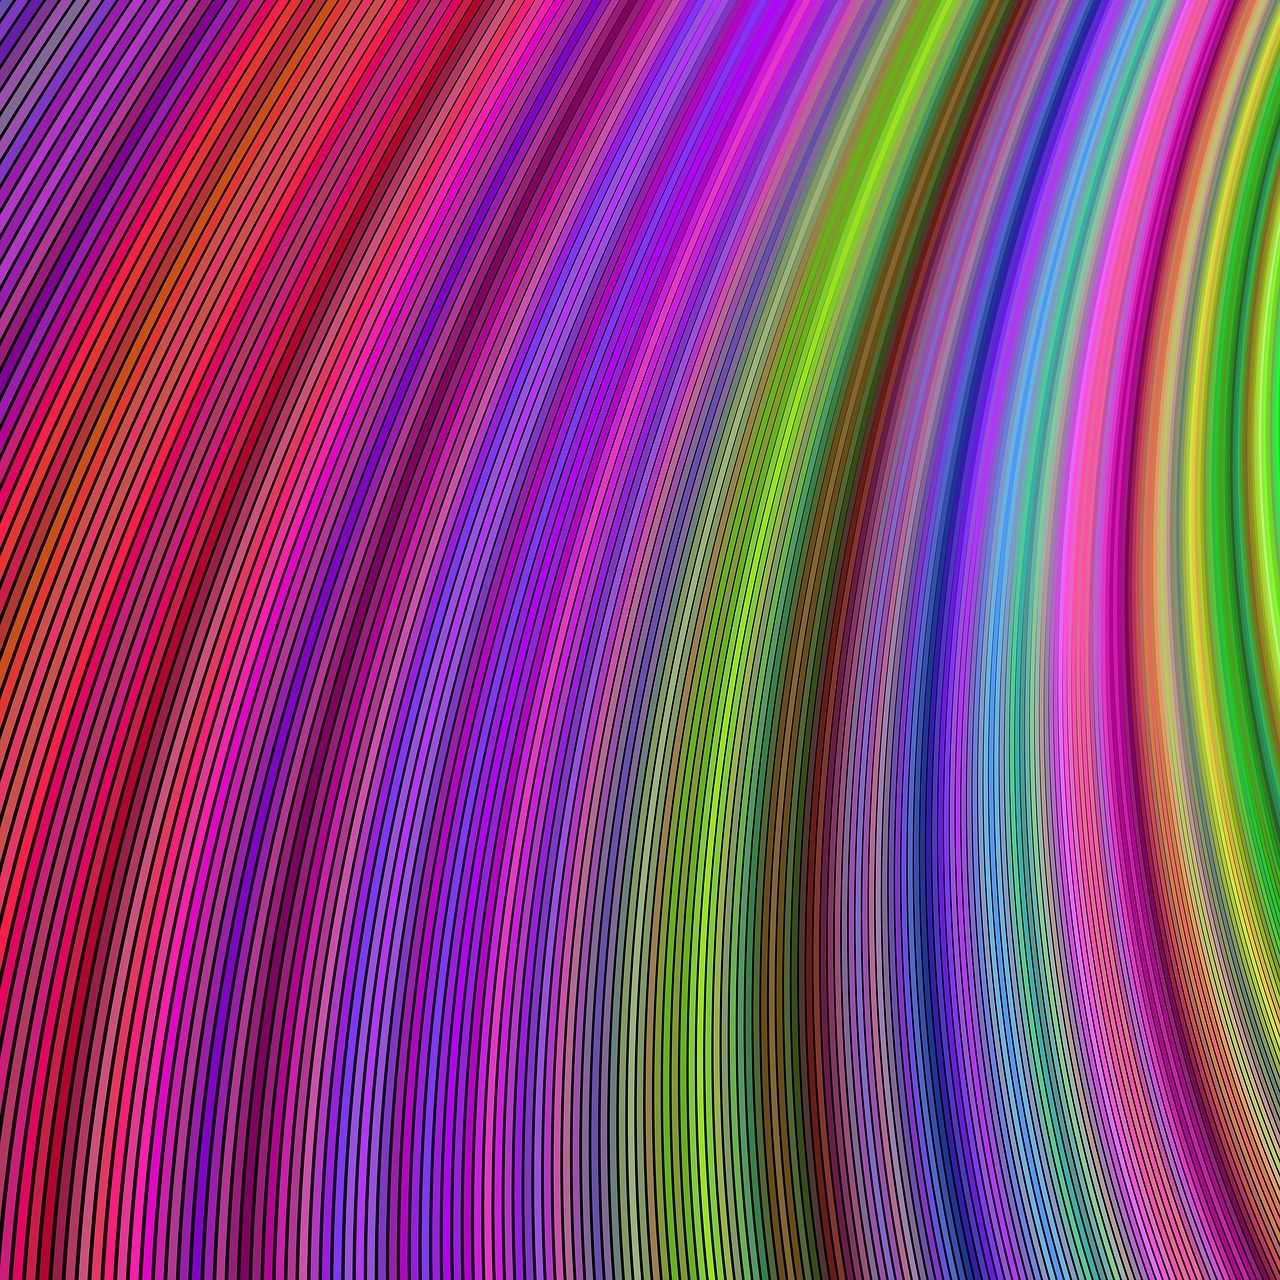 spectrum multicolored background free photo